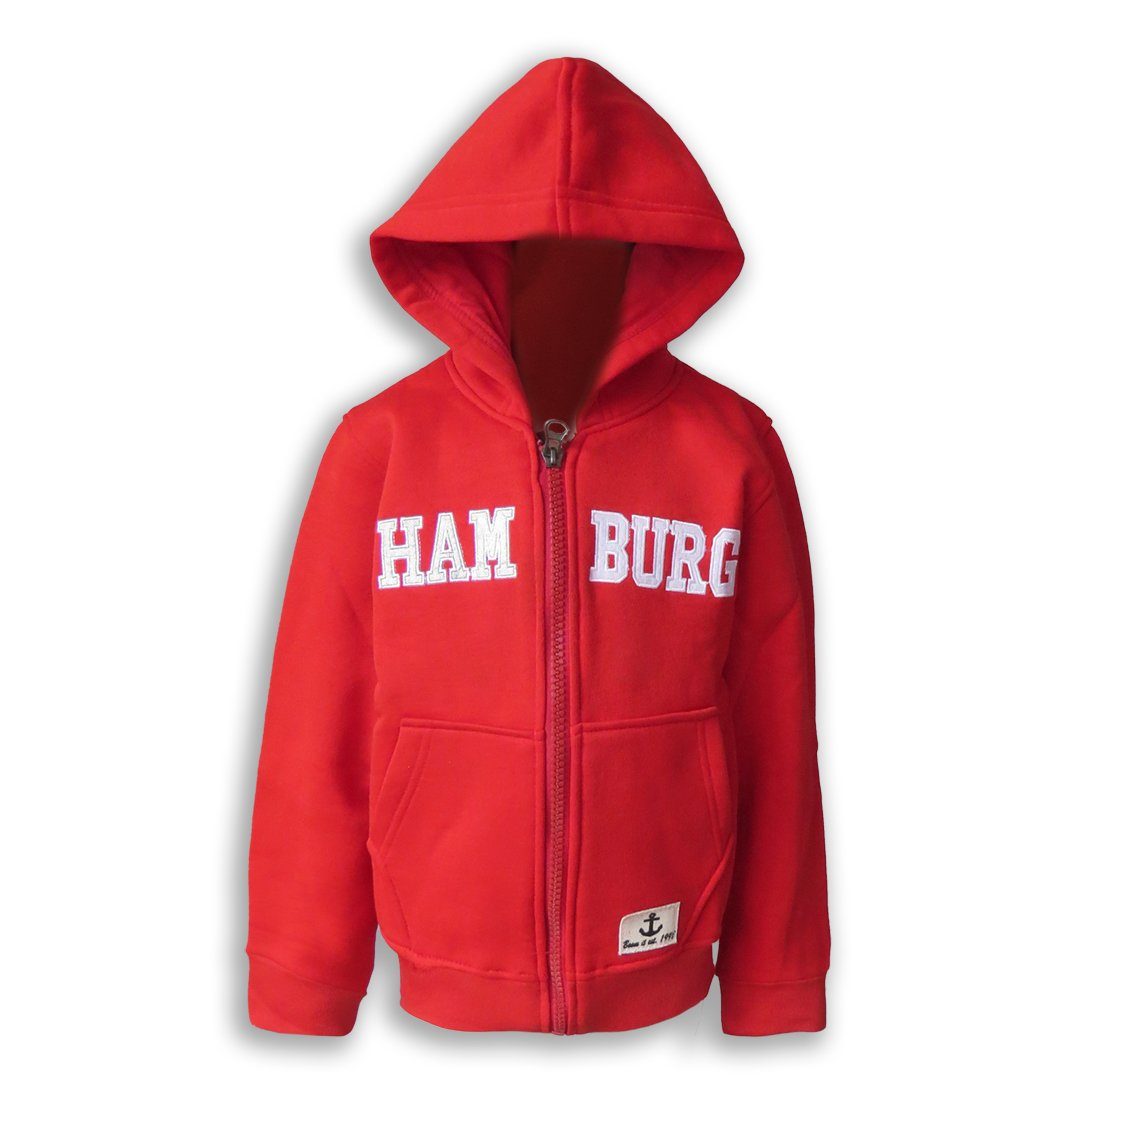 Sonia Originelli T-Shirt Sweatjacke "Hamburg" Kinder unifarben Jacke Hoodie bestickt rot